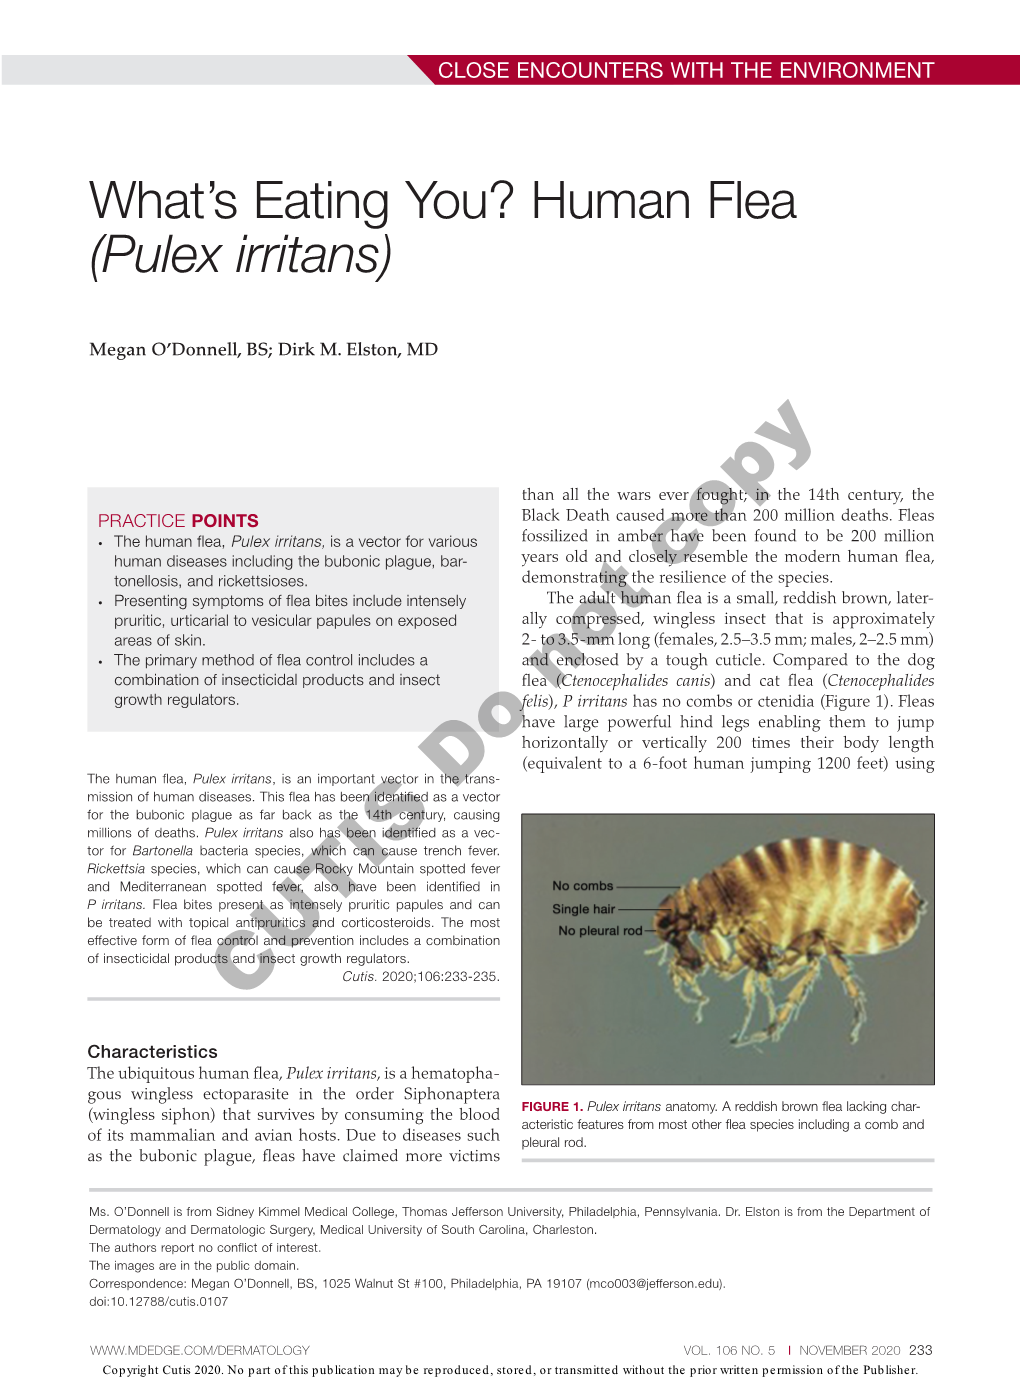 What's Eating You? Human Flea (Pulex Irritans)